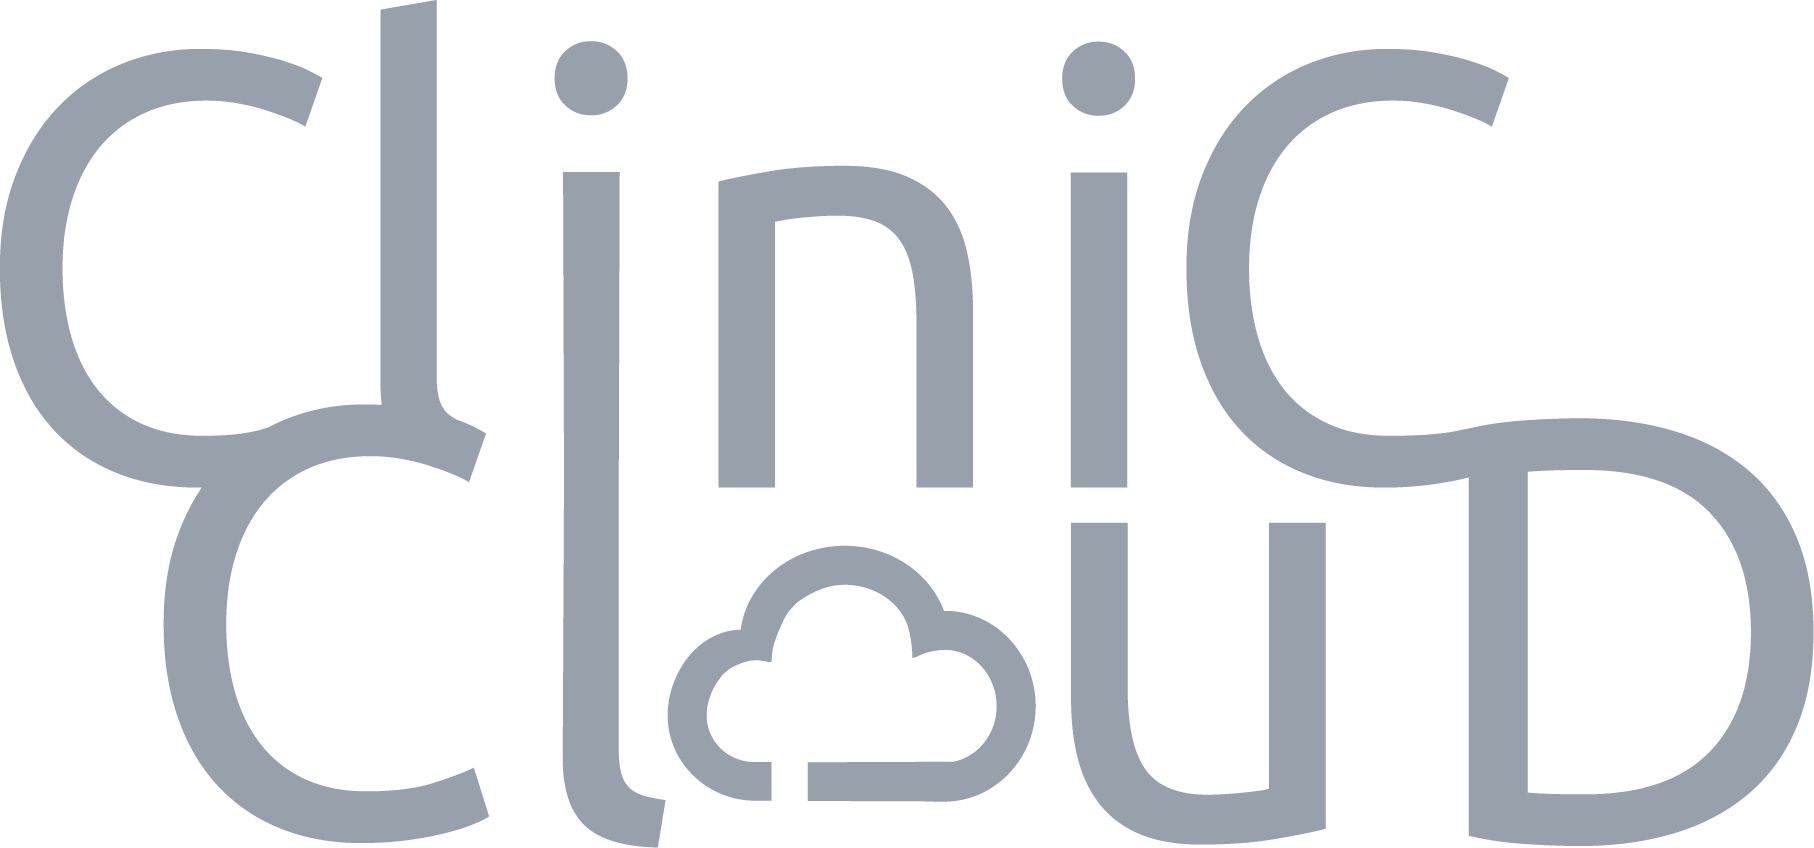 logo-clinic-cloud-grey